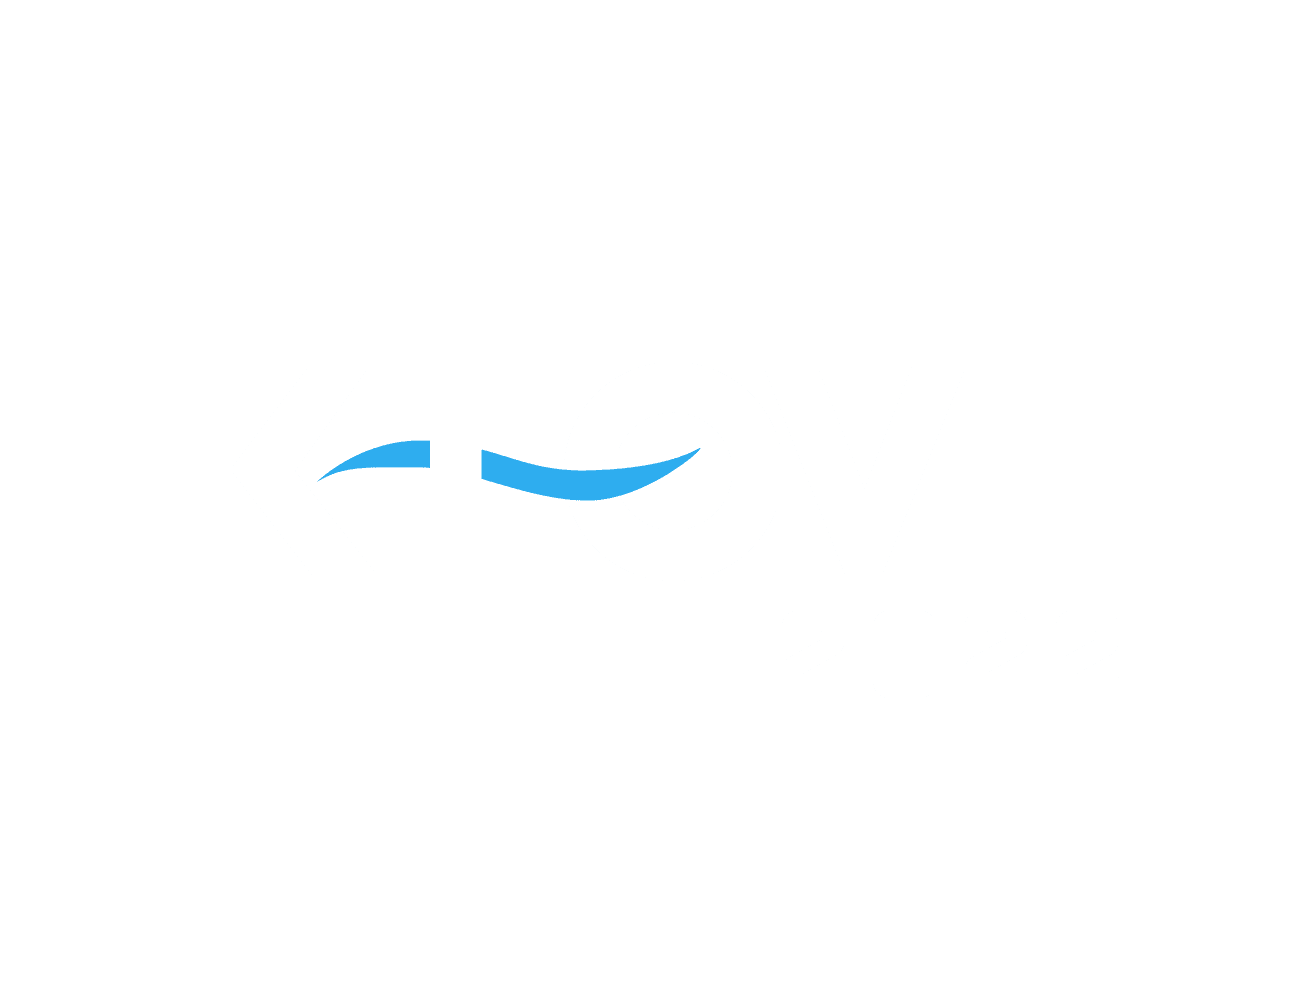 KLOVE 2022 TM Studios